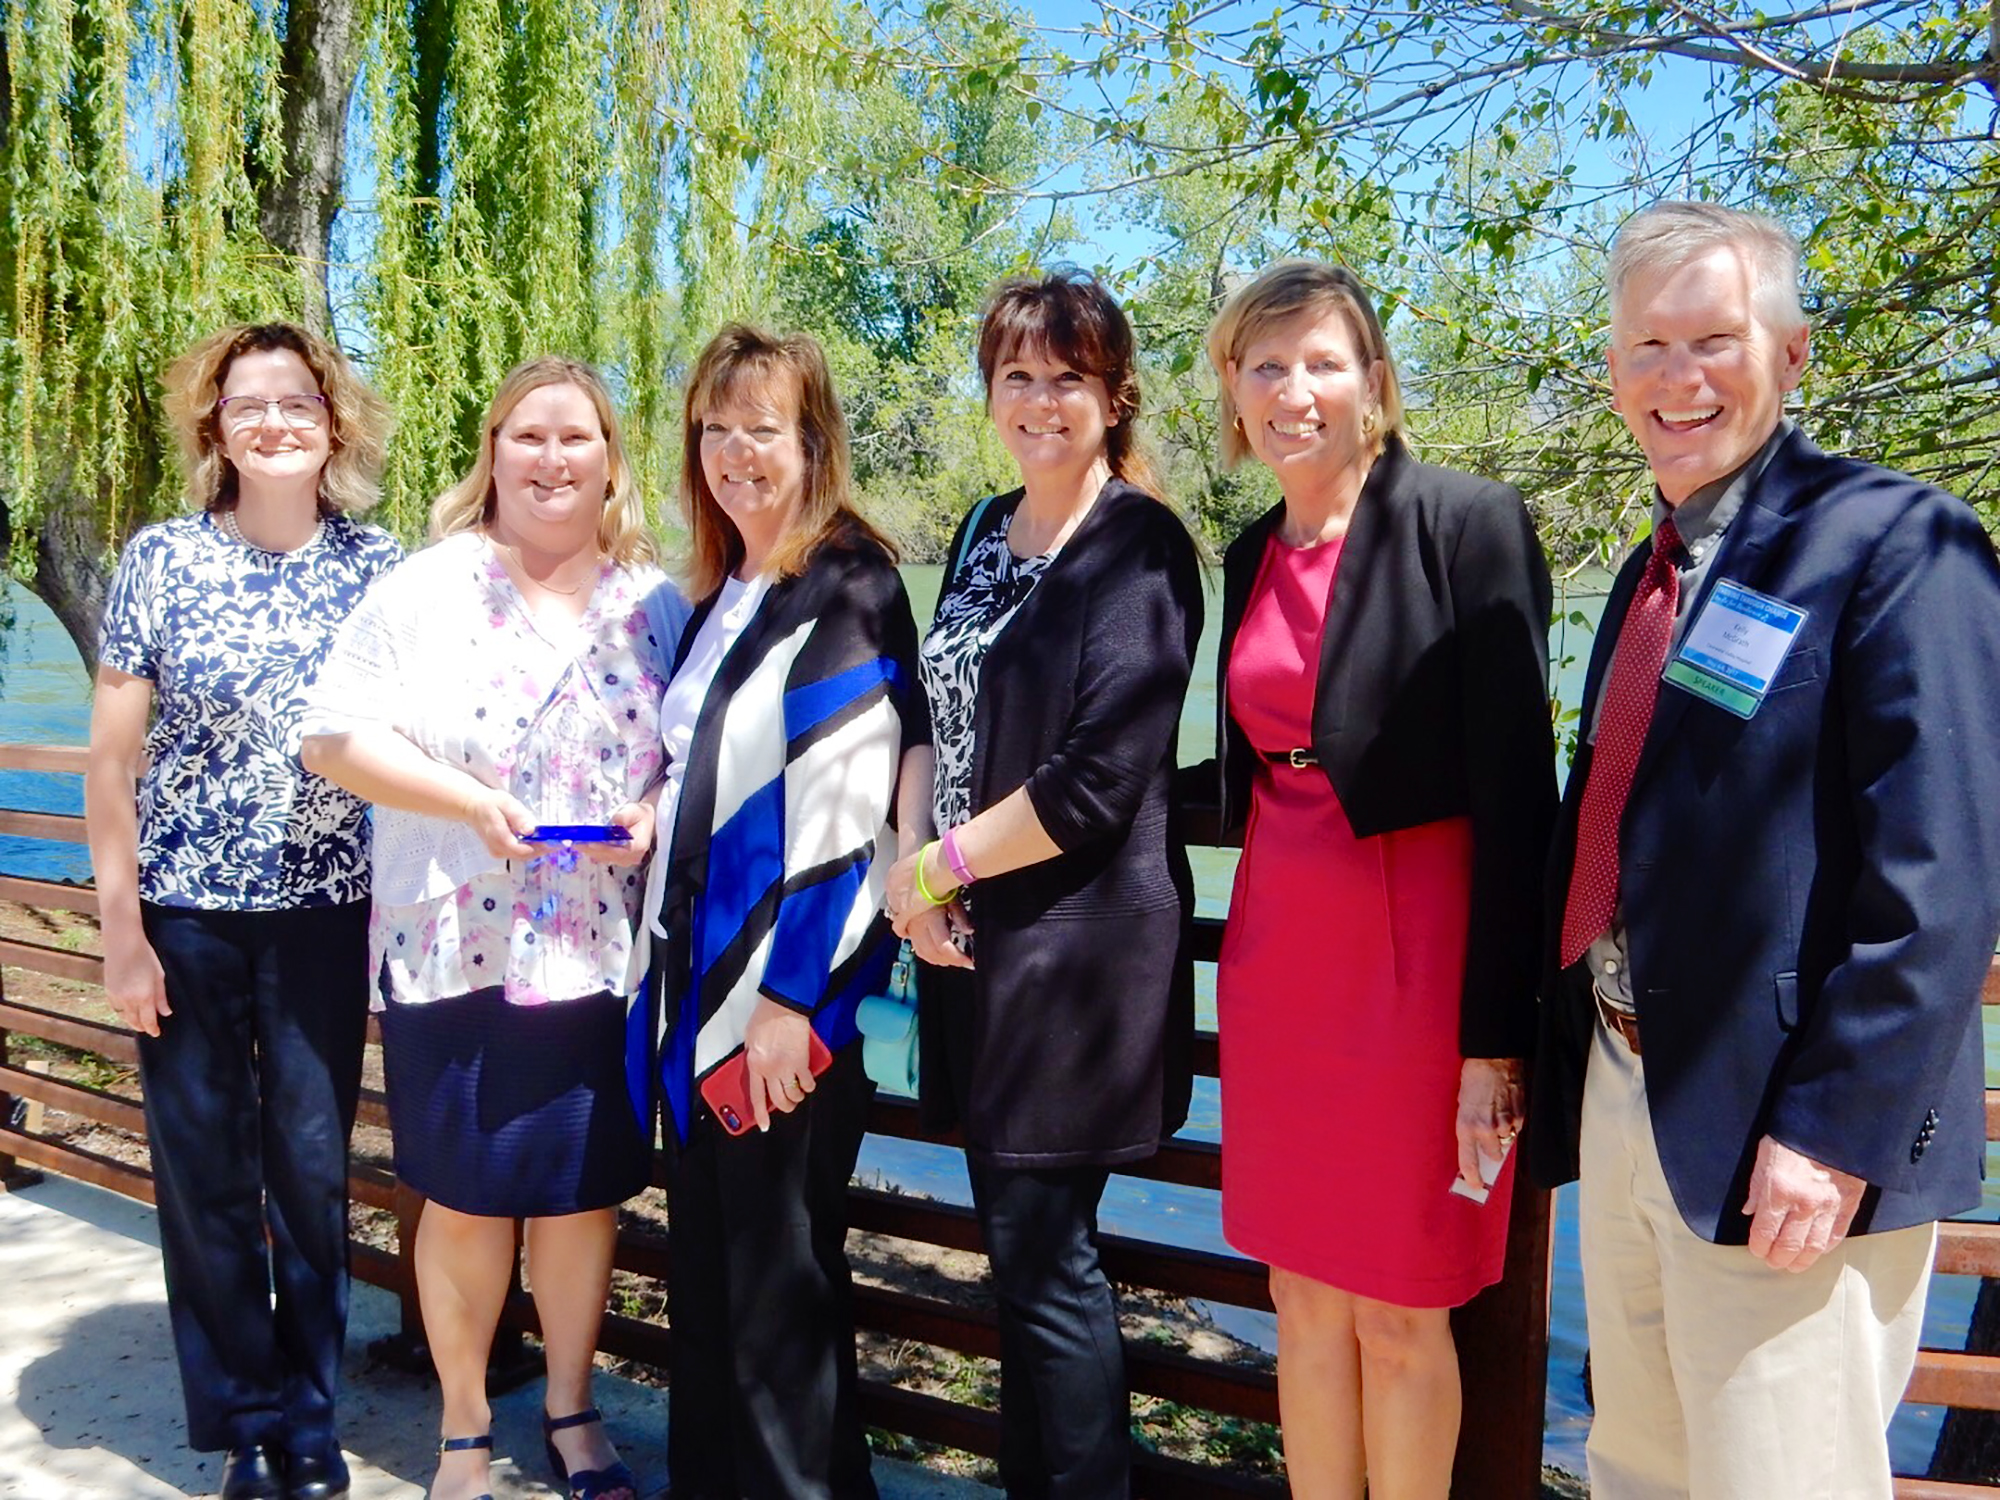 Kootenai receives Qualis Health Award of Excellence